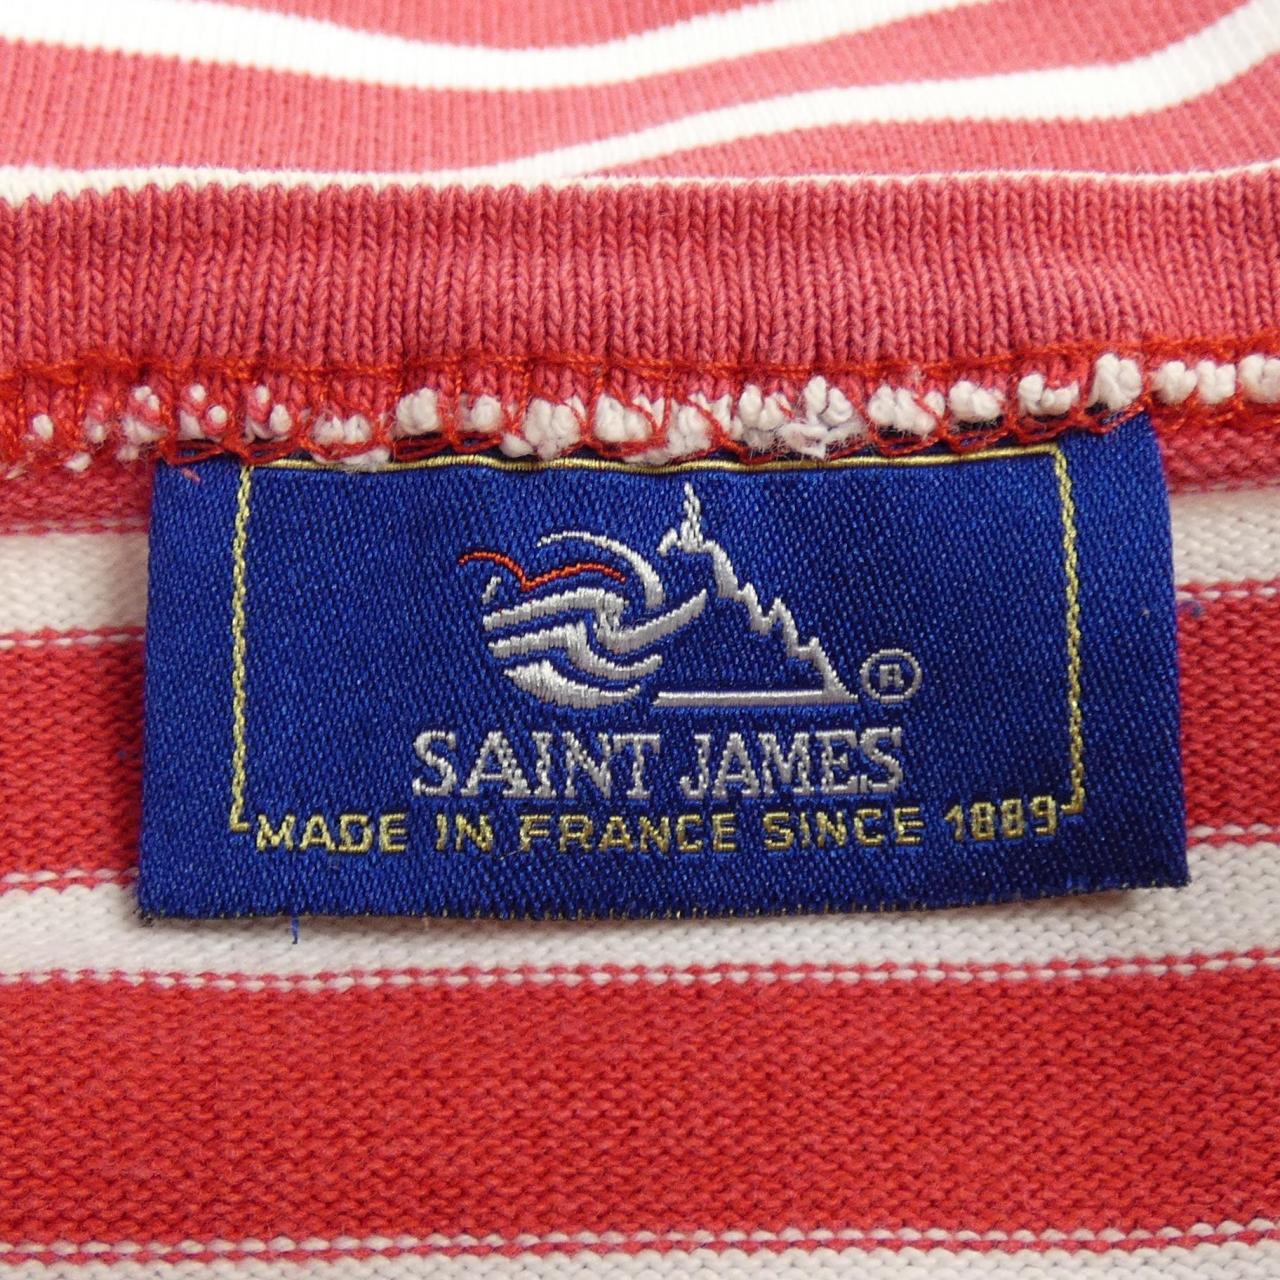 Saint James SAINT JAMES top